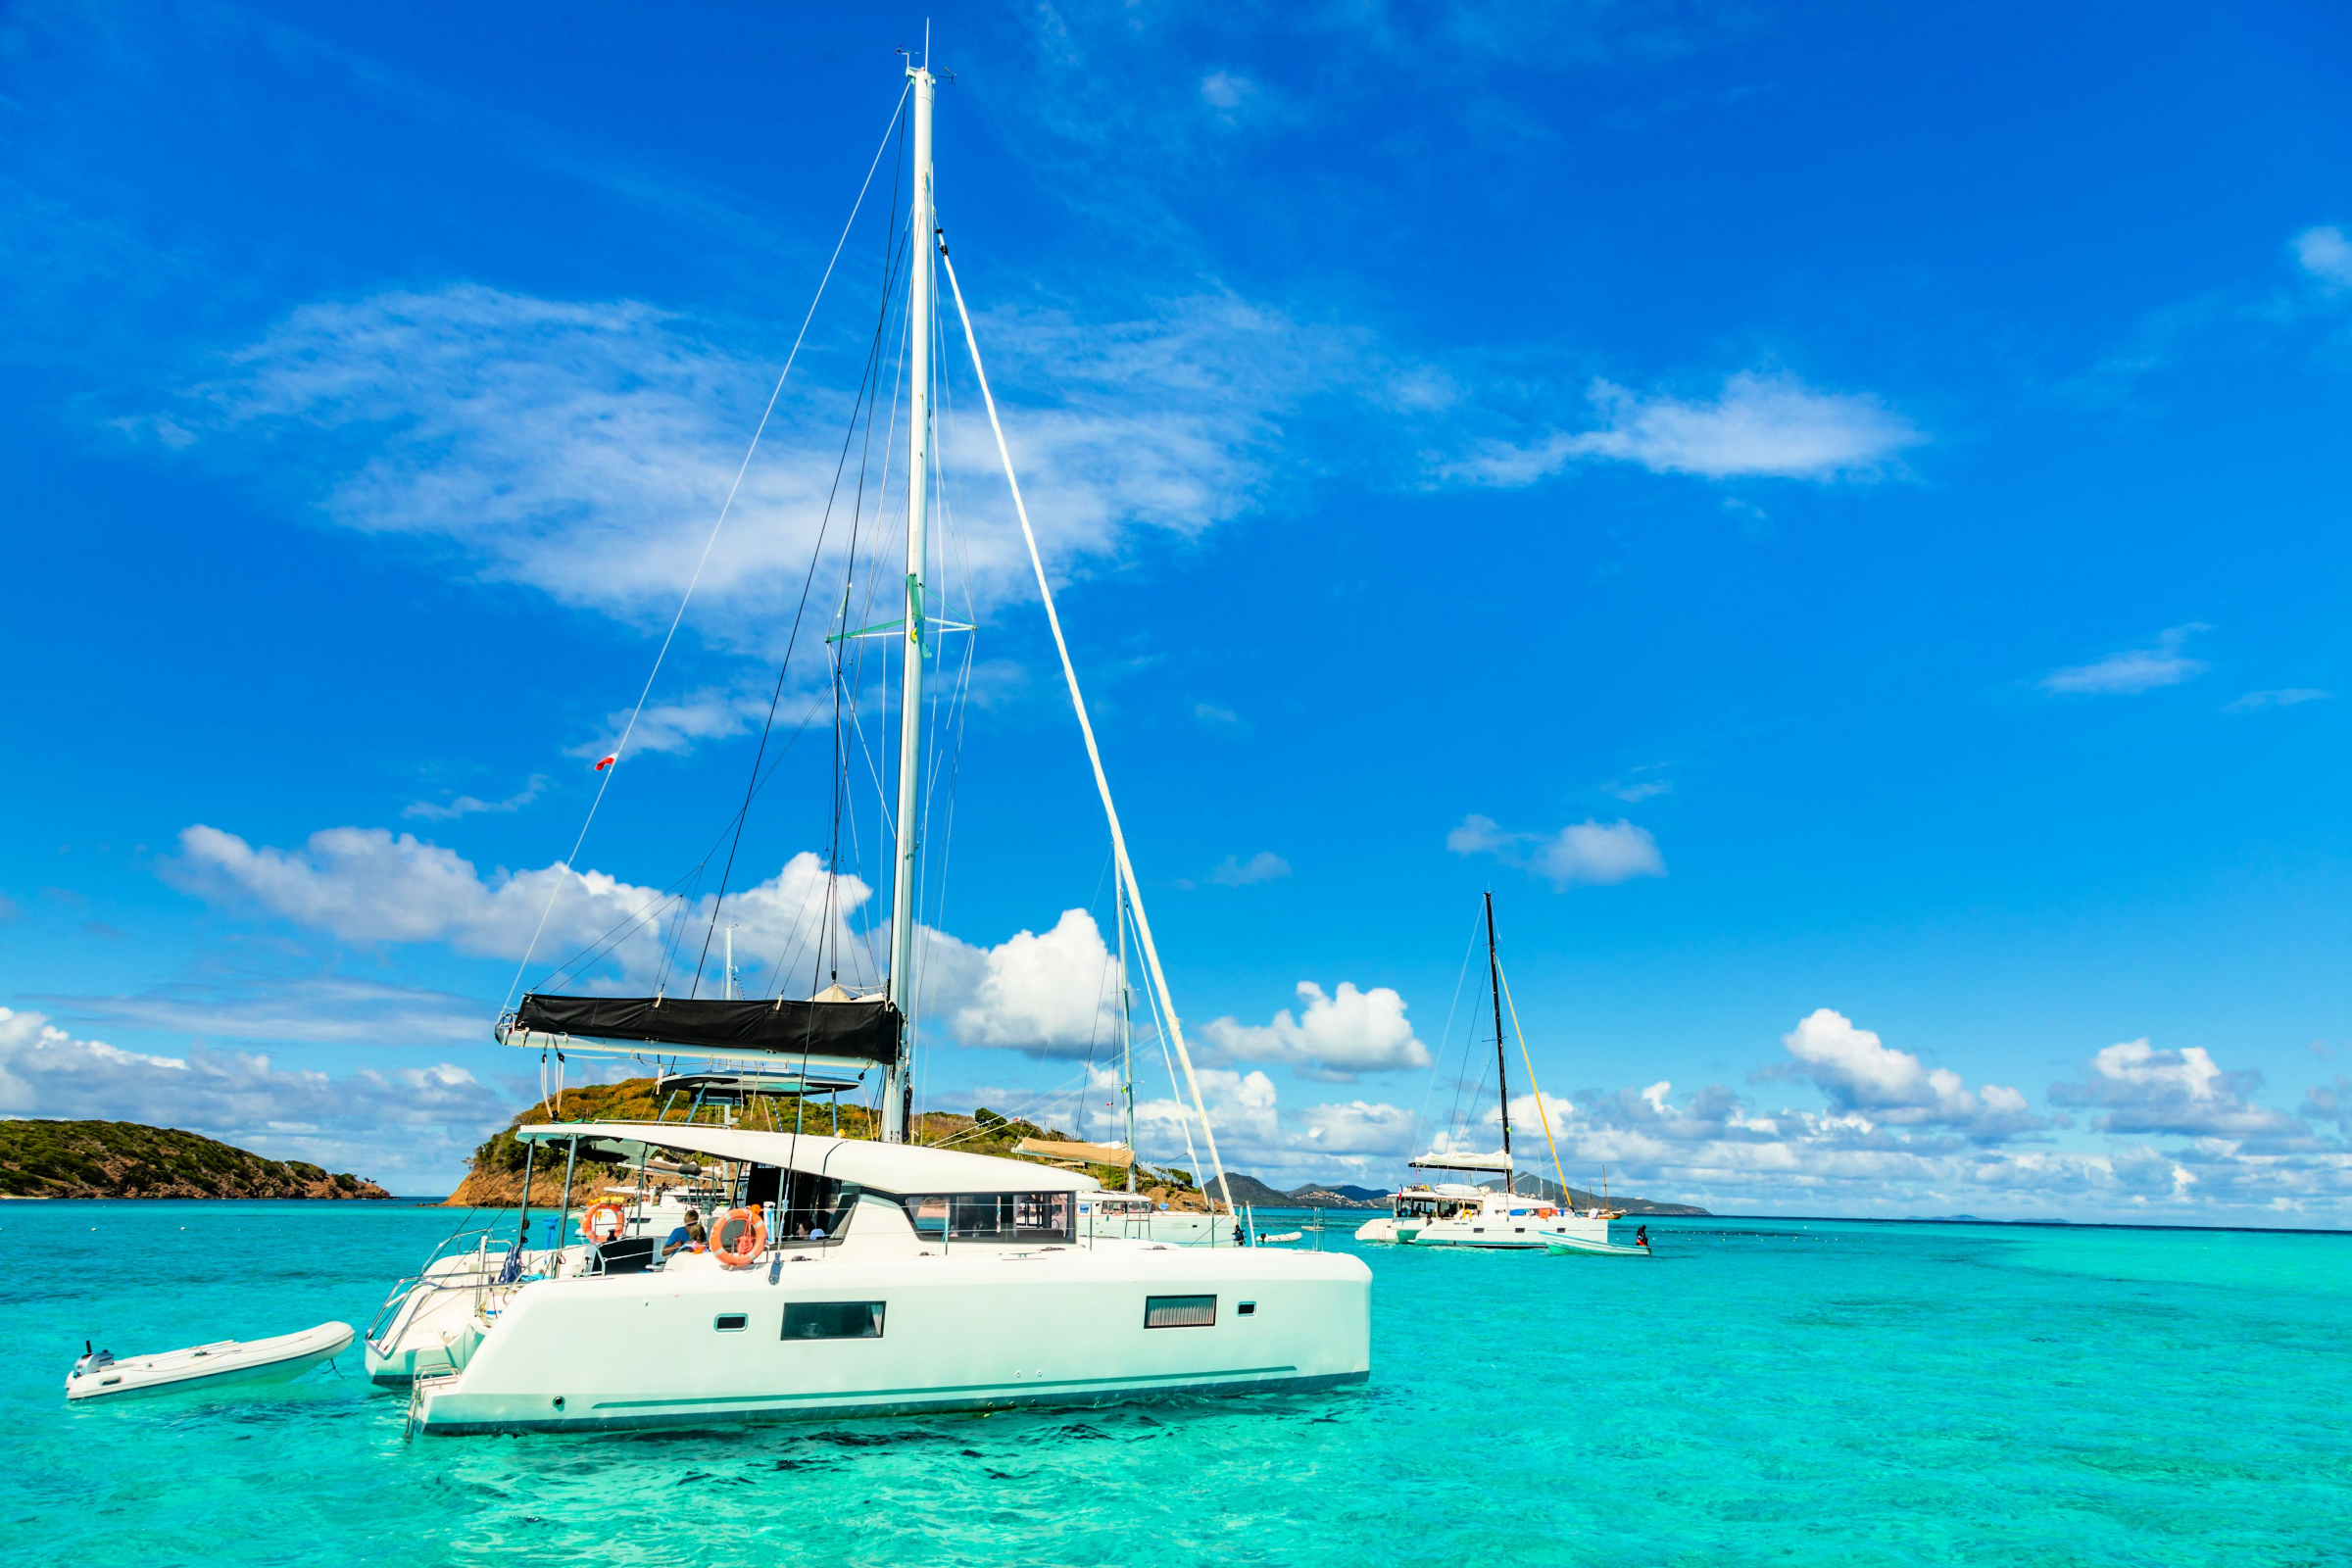 Go Sailing With a Luxury Catamaran or Yacht